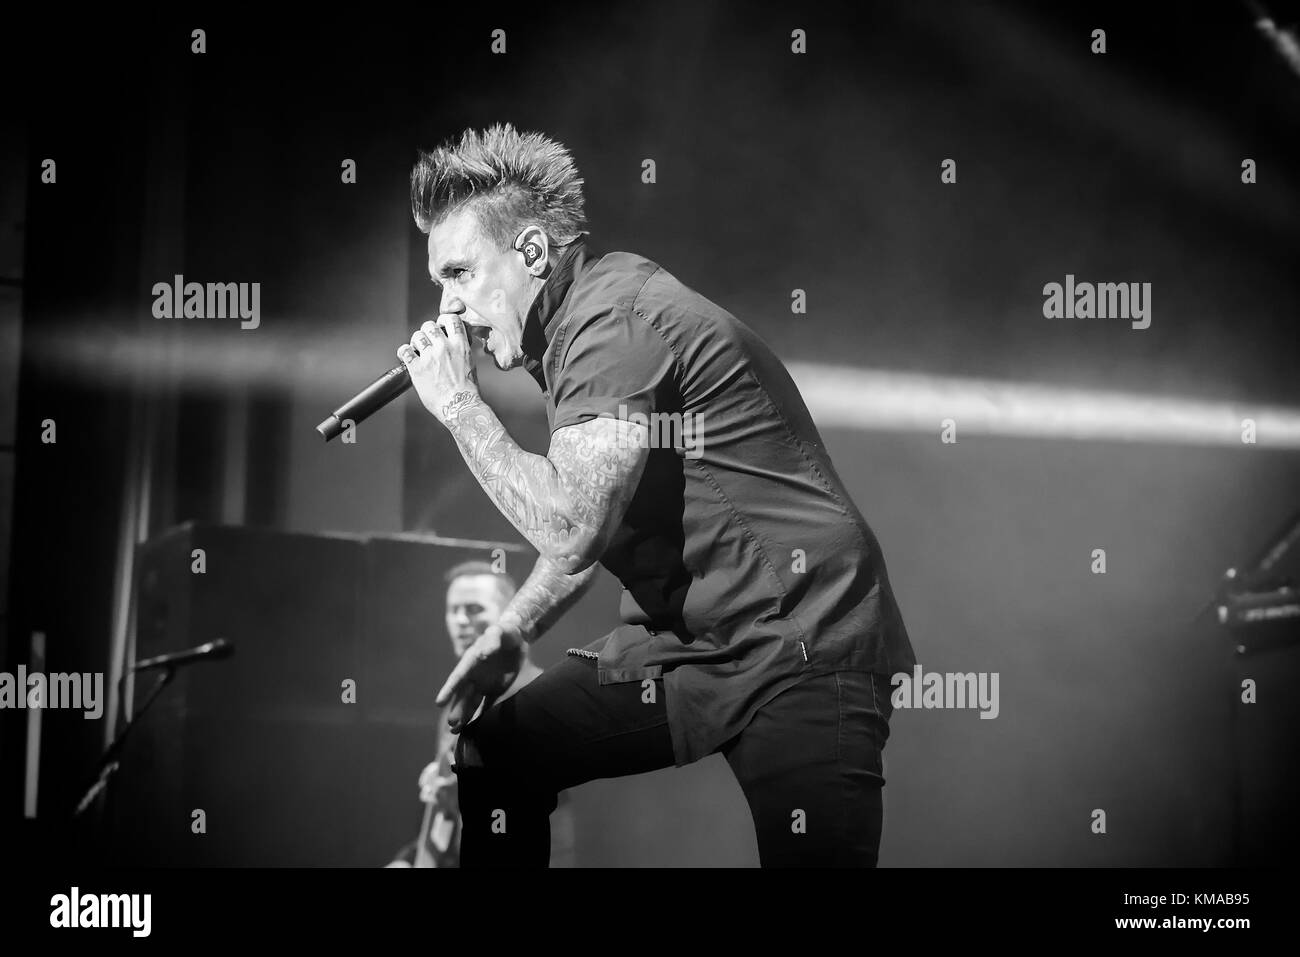 Deutschland, Fürth, stadthalle fürth, 27.09.2017- Papa Roach "dents de travers tour' - Bild : jacoby shaddix (Papa Roach, chant) Banque D'Images